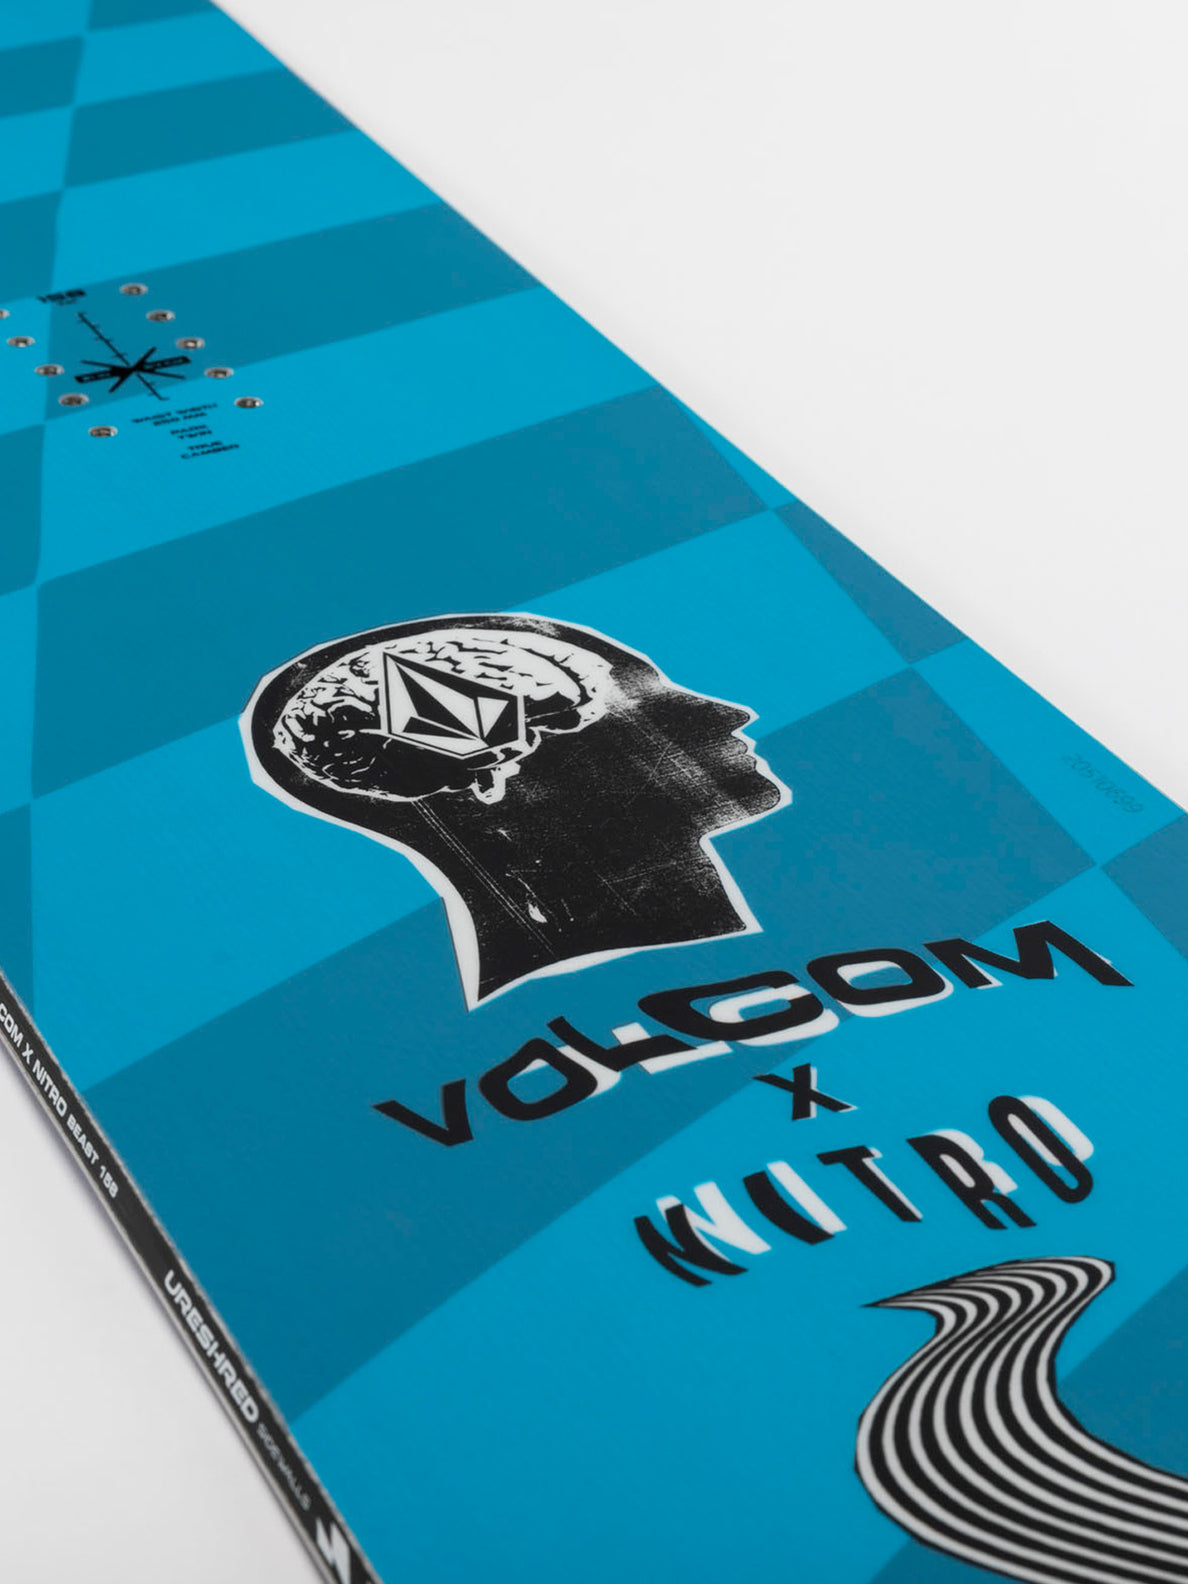 Volcom X Nitro Beast Snowboard - Blue (2021) (2022)